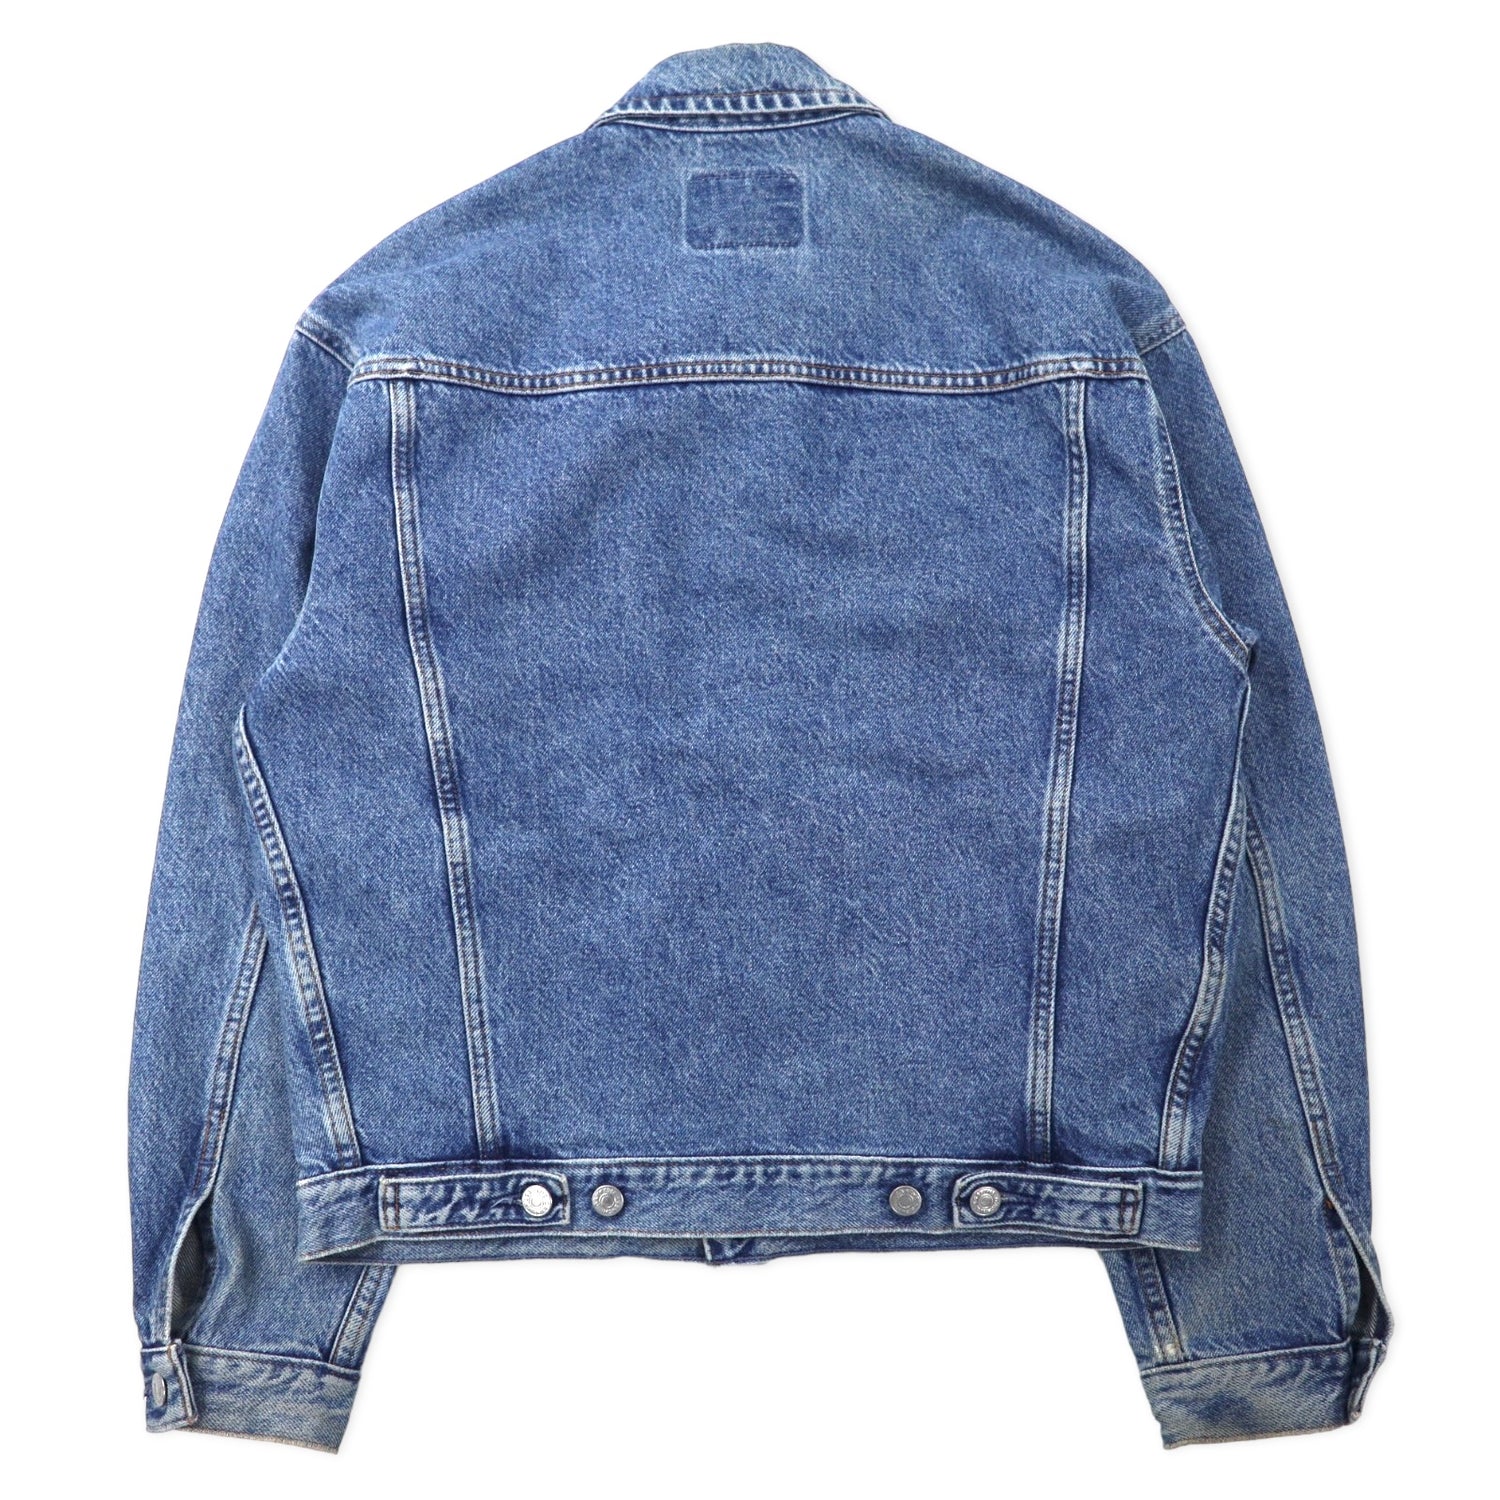 GAP DENIM USA MADE 90s Vintage Denim Jacket G Jean S Blue Cotton 